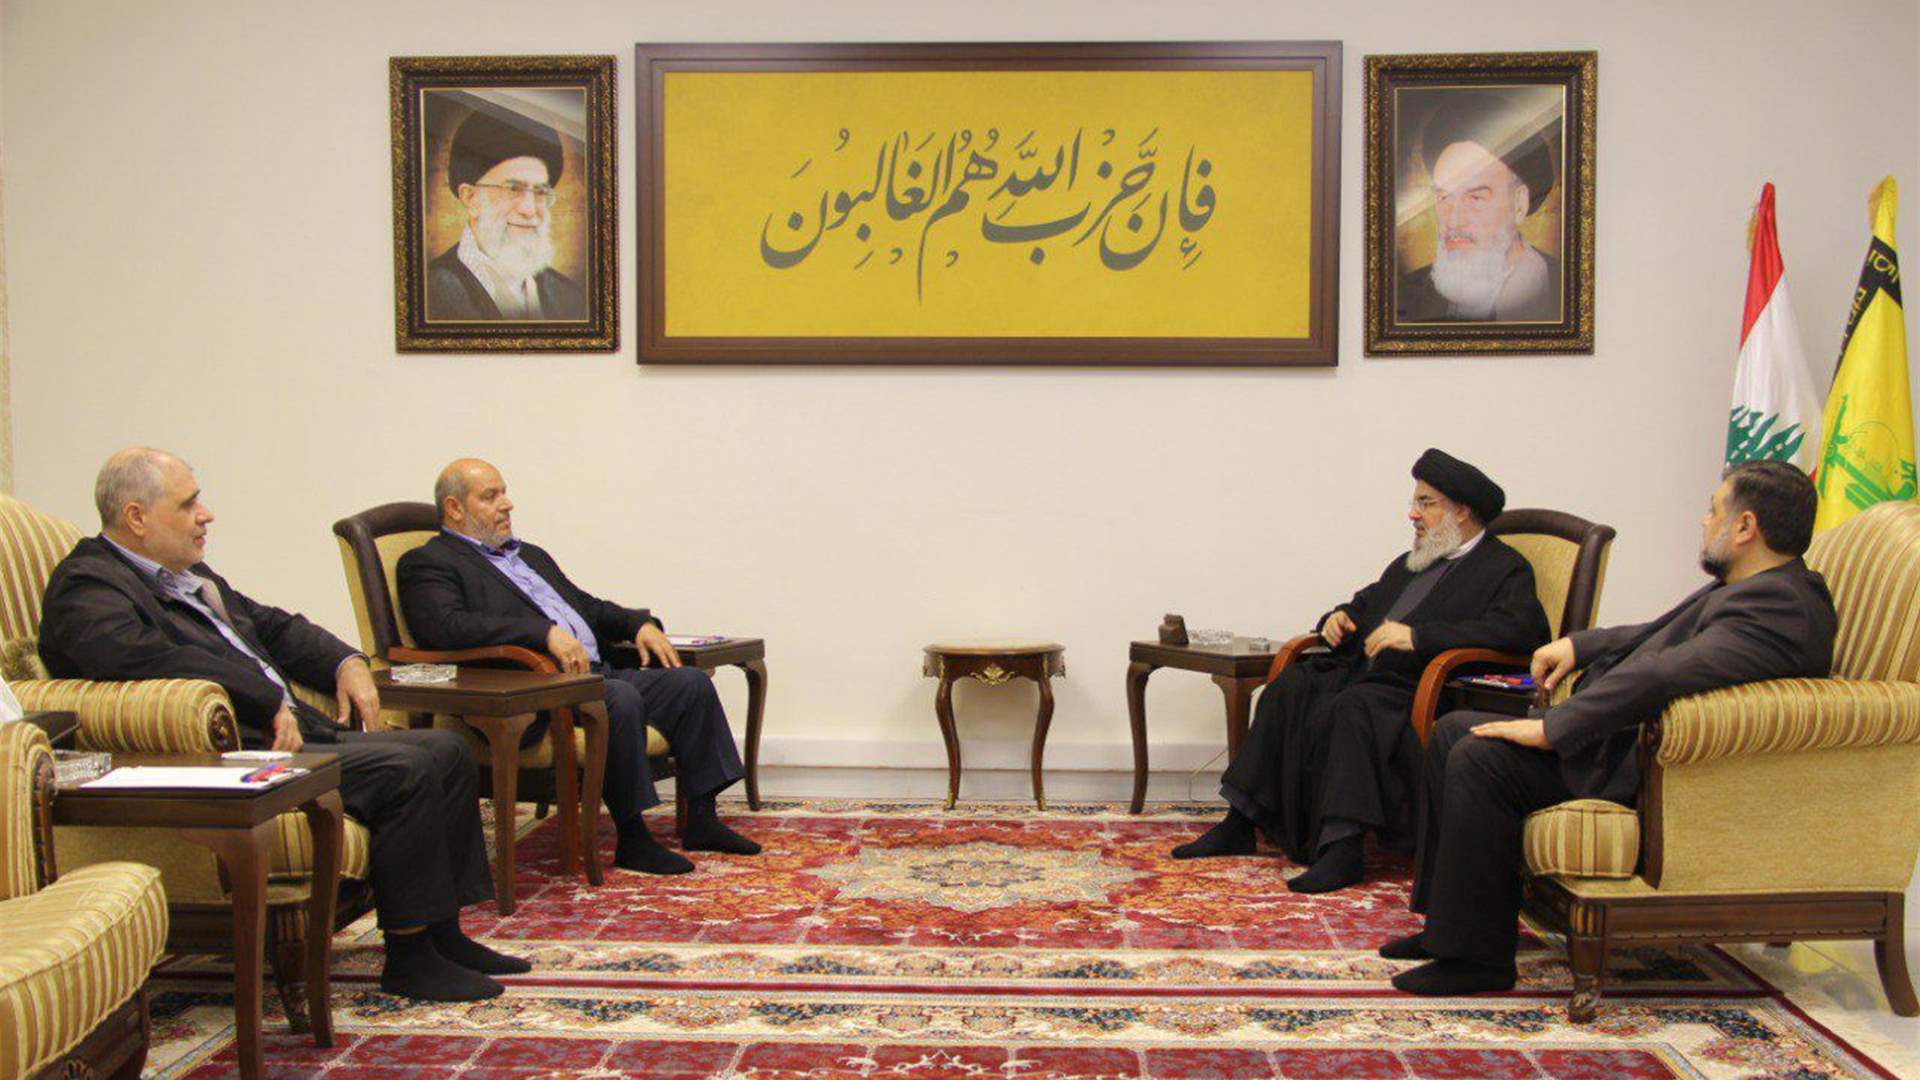 Hezbollah leader Nasrallah meets with Hamas delegation to discuss Gaza war developments